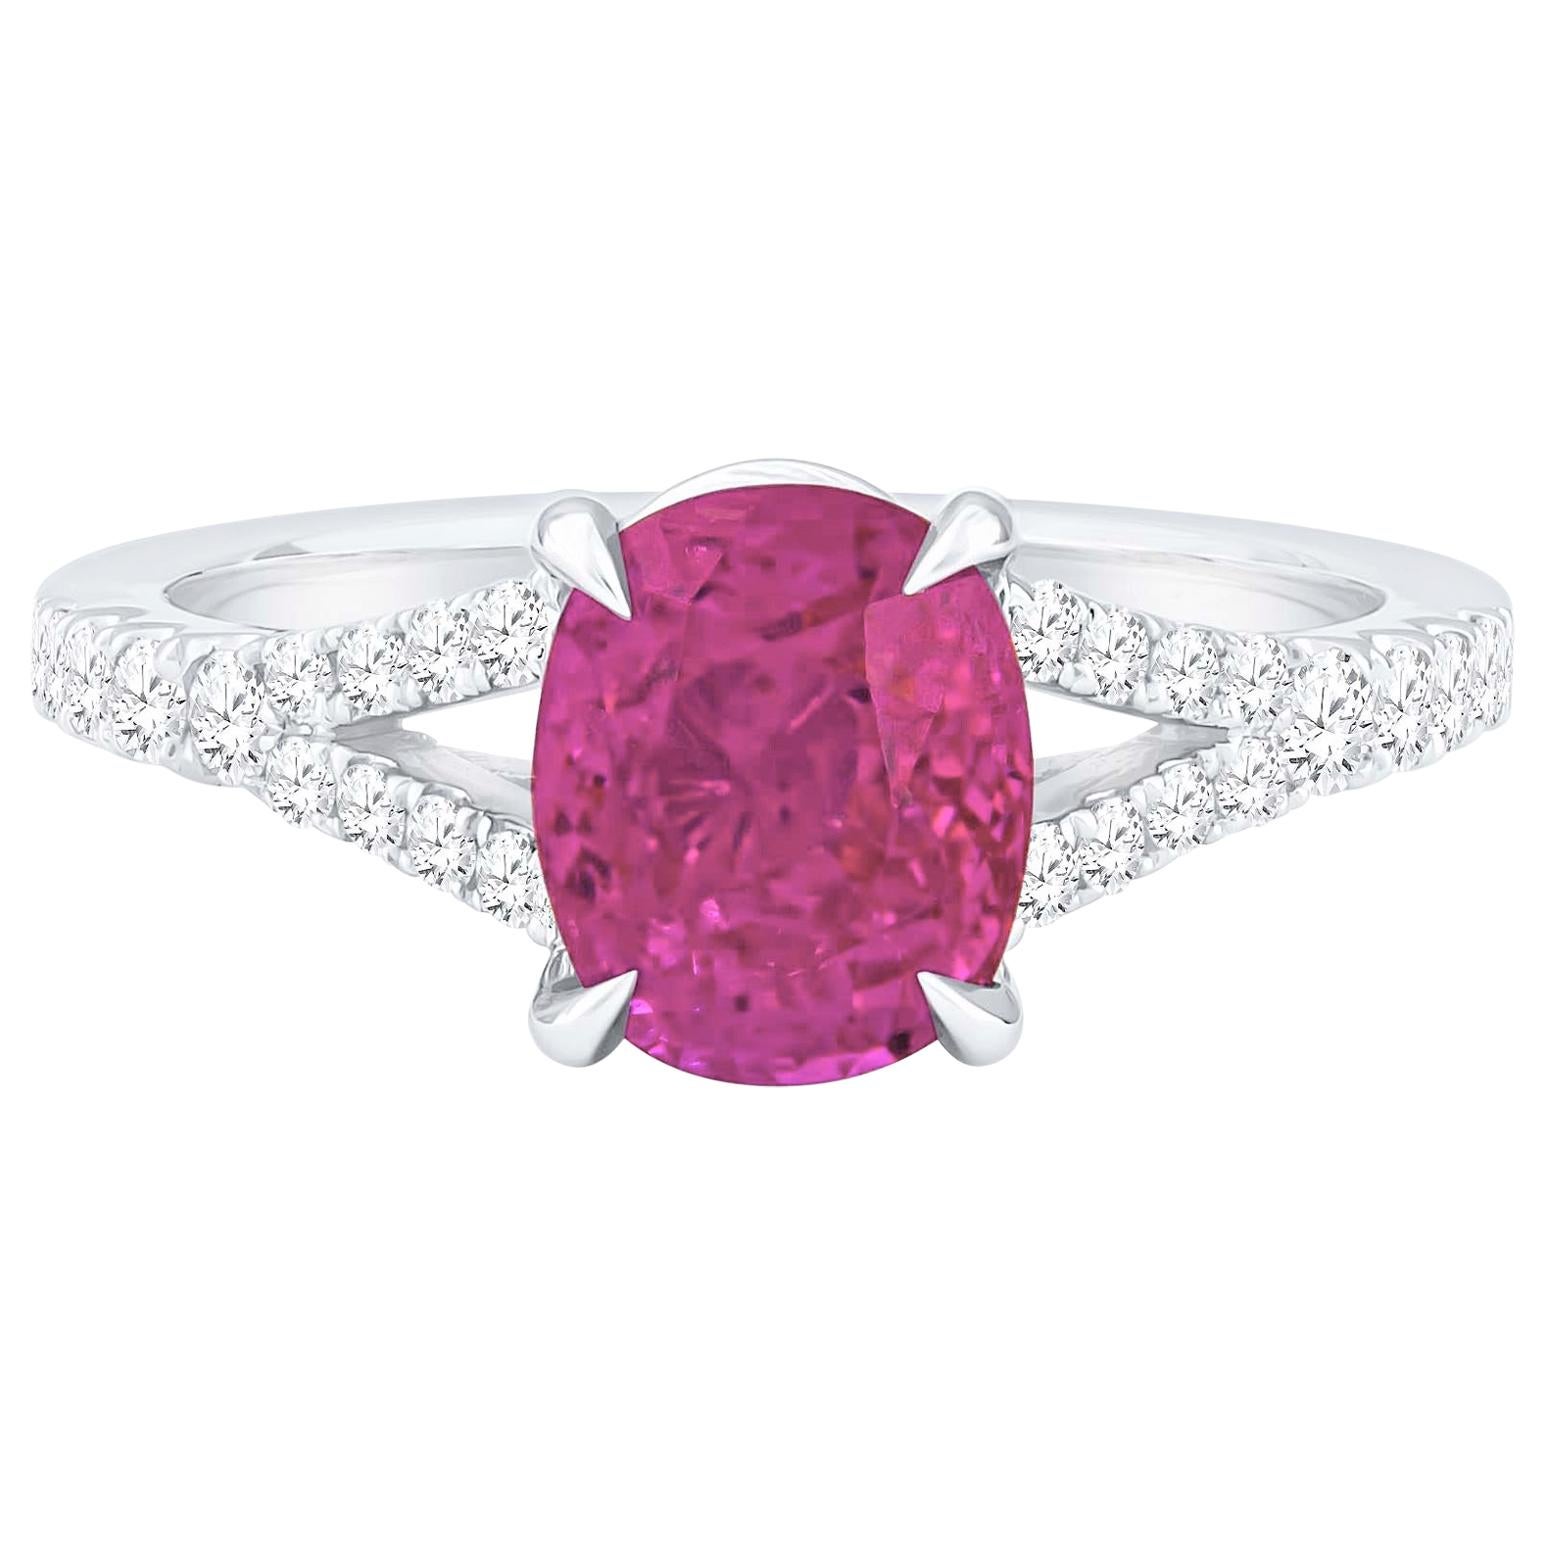 2.77 Carat Cushion Cut Natural Pink Burma Sapphire 'GIA' and Diamond Ring, 18K